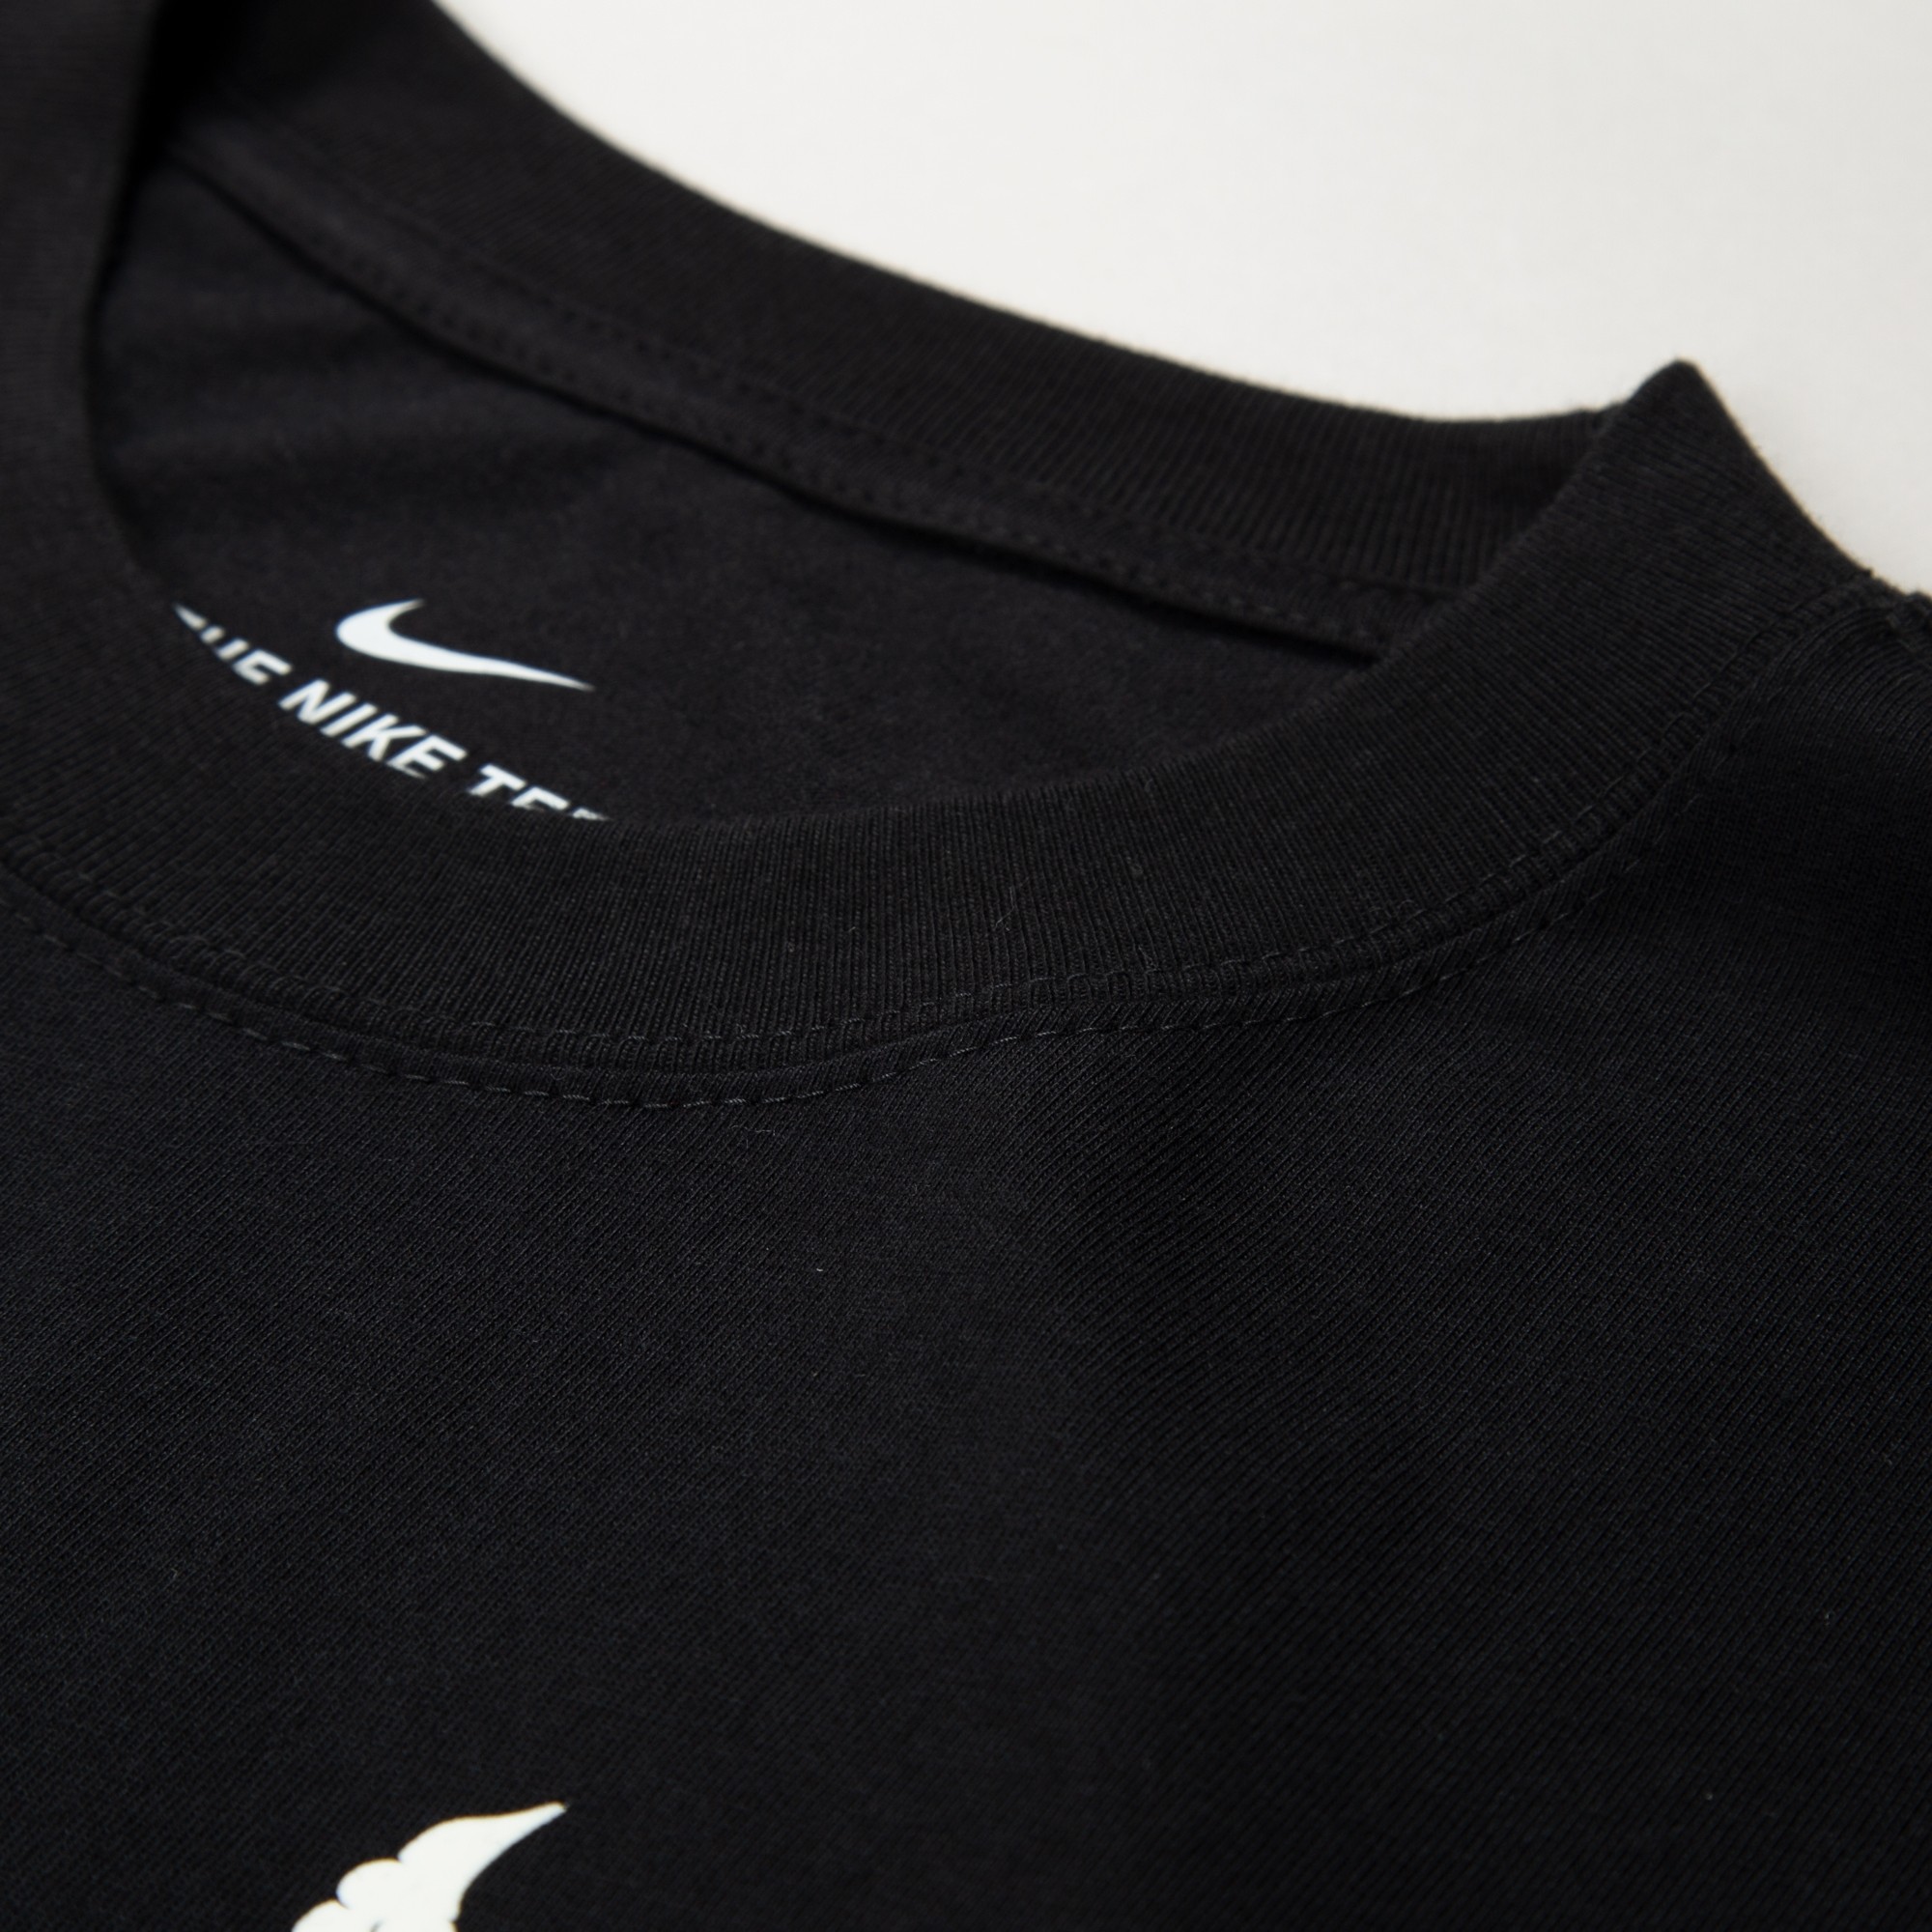 Nike SB Dragon T-Shirt (Black) - DC7815-010 - Consortium